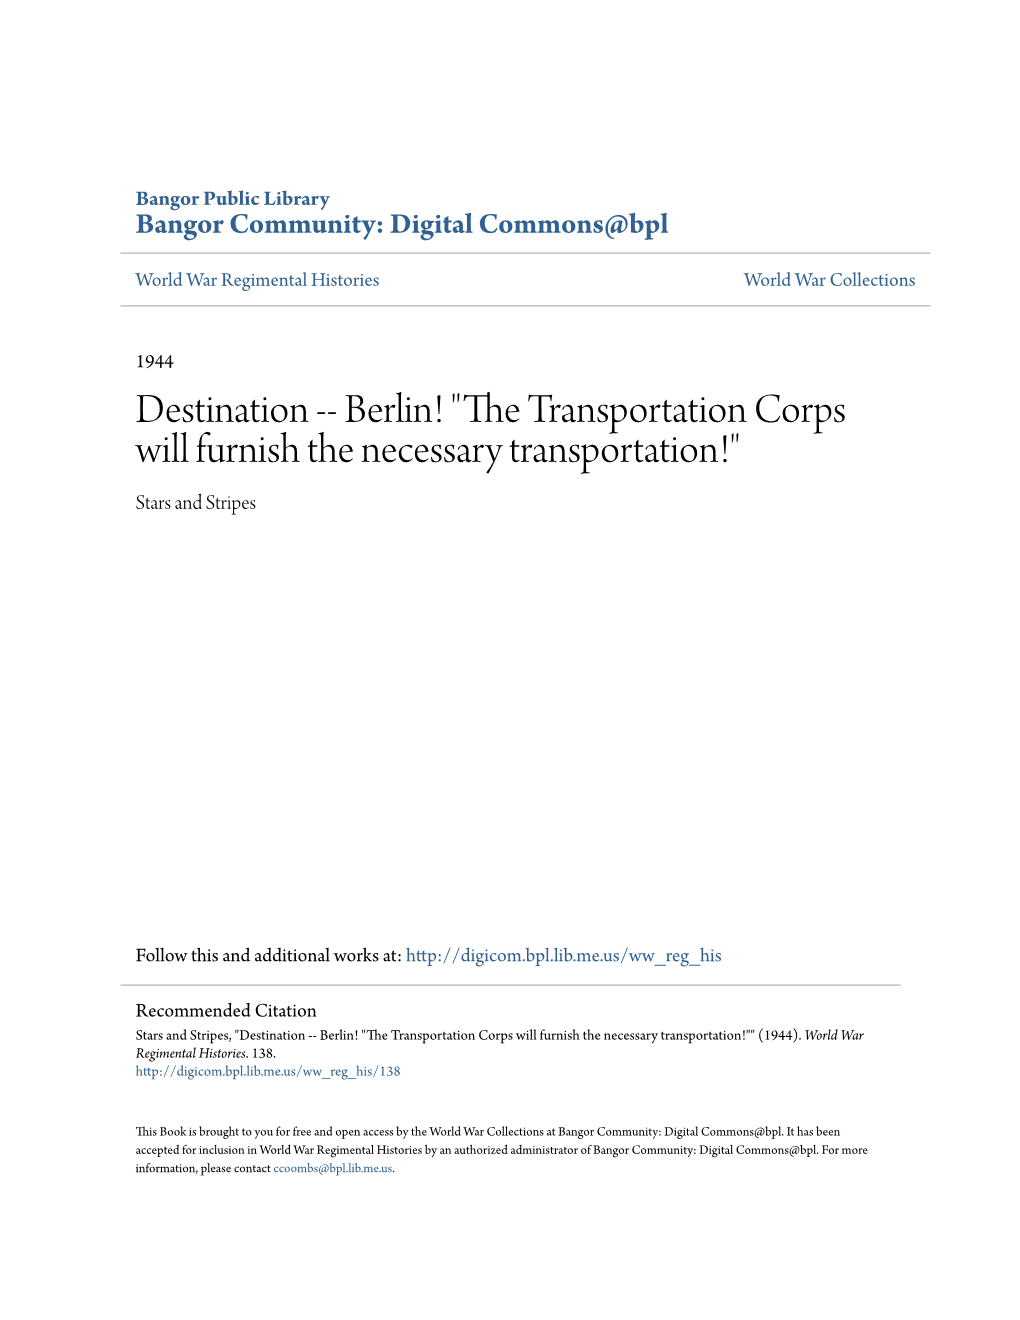 Berlin! "The Transportation Corps Will Furnish the Necessary Transportation!"